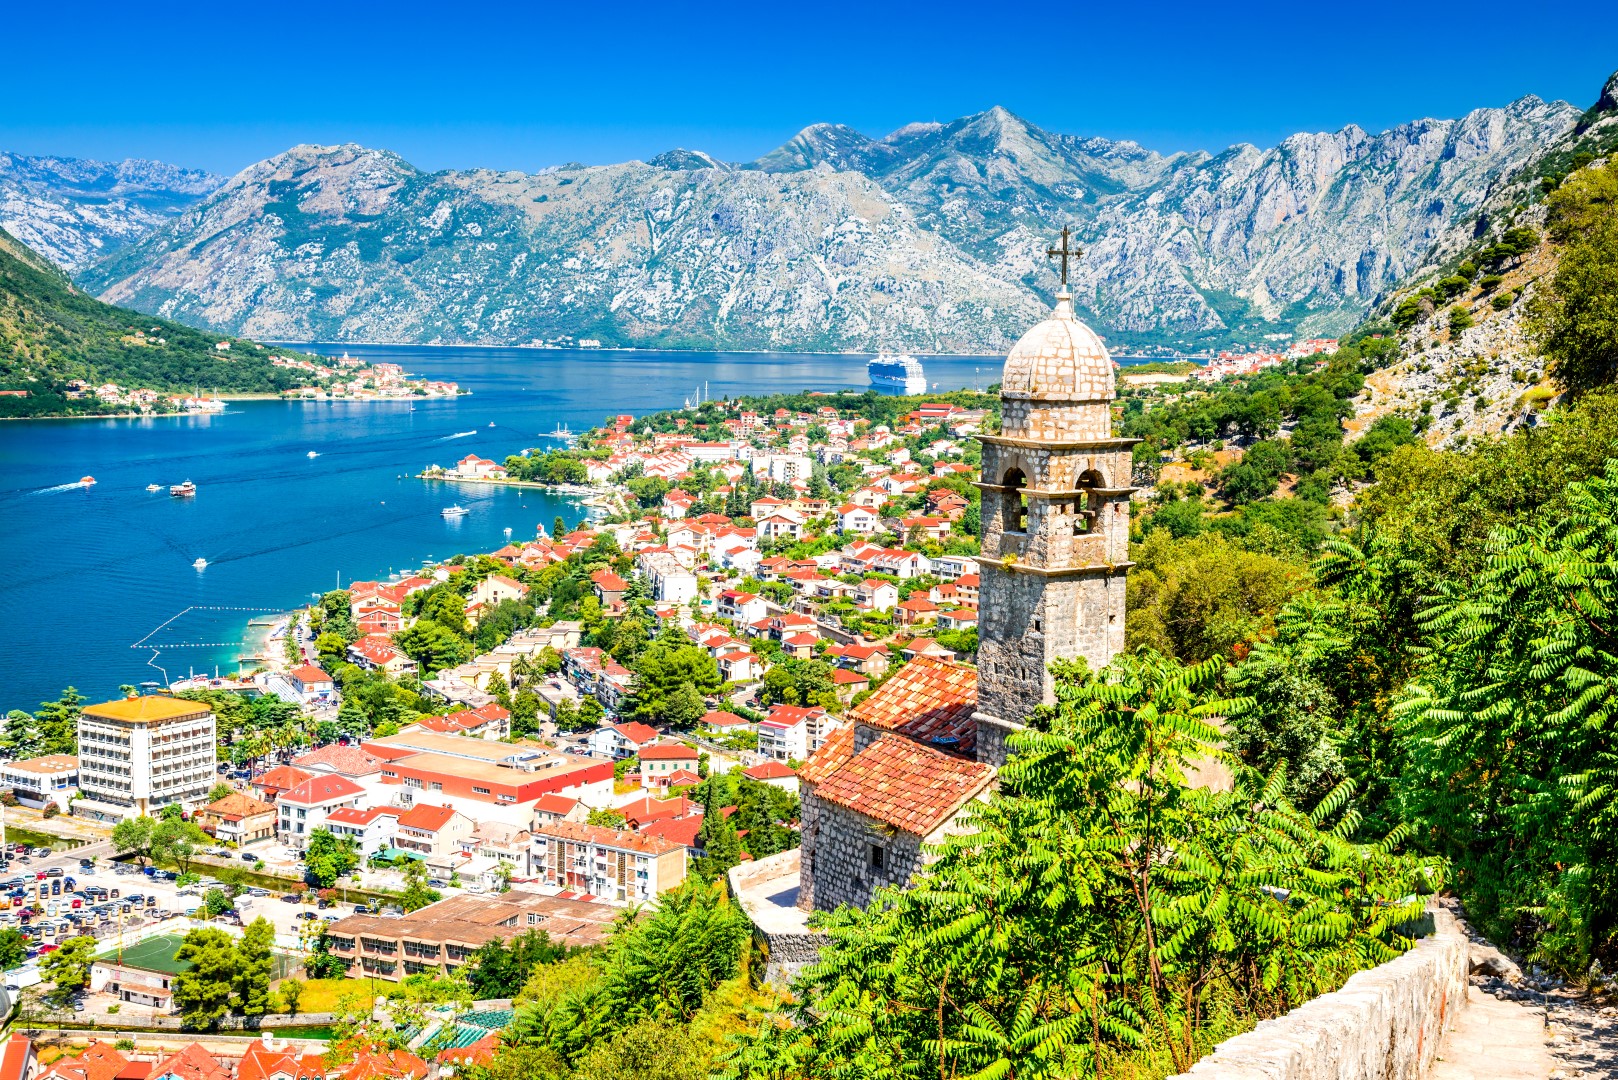 sail-in-montenegro-st-tropez-of-the-adriatic-sailingeurope-blog